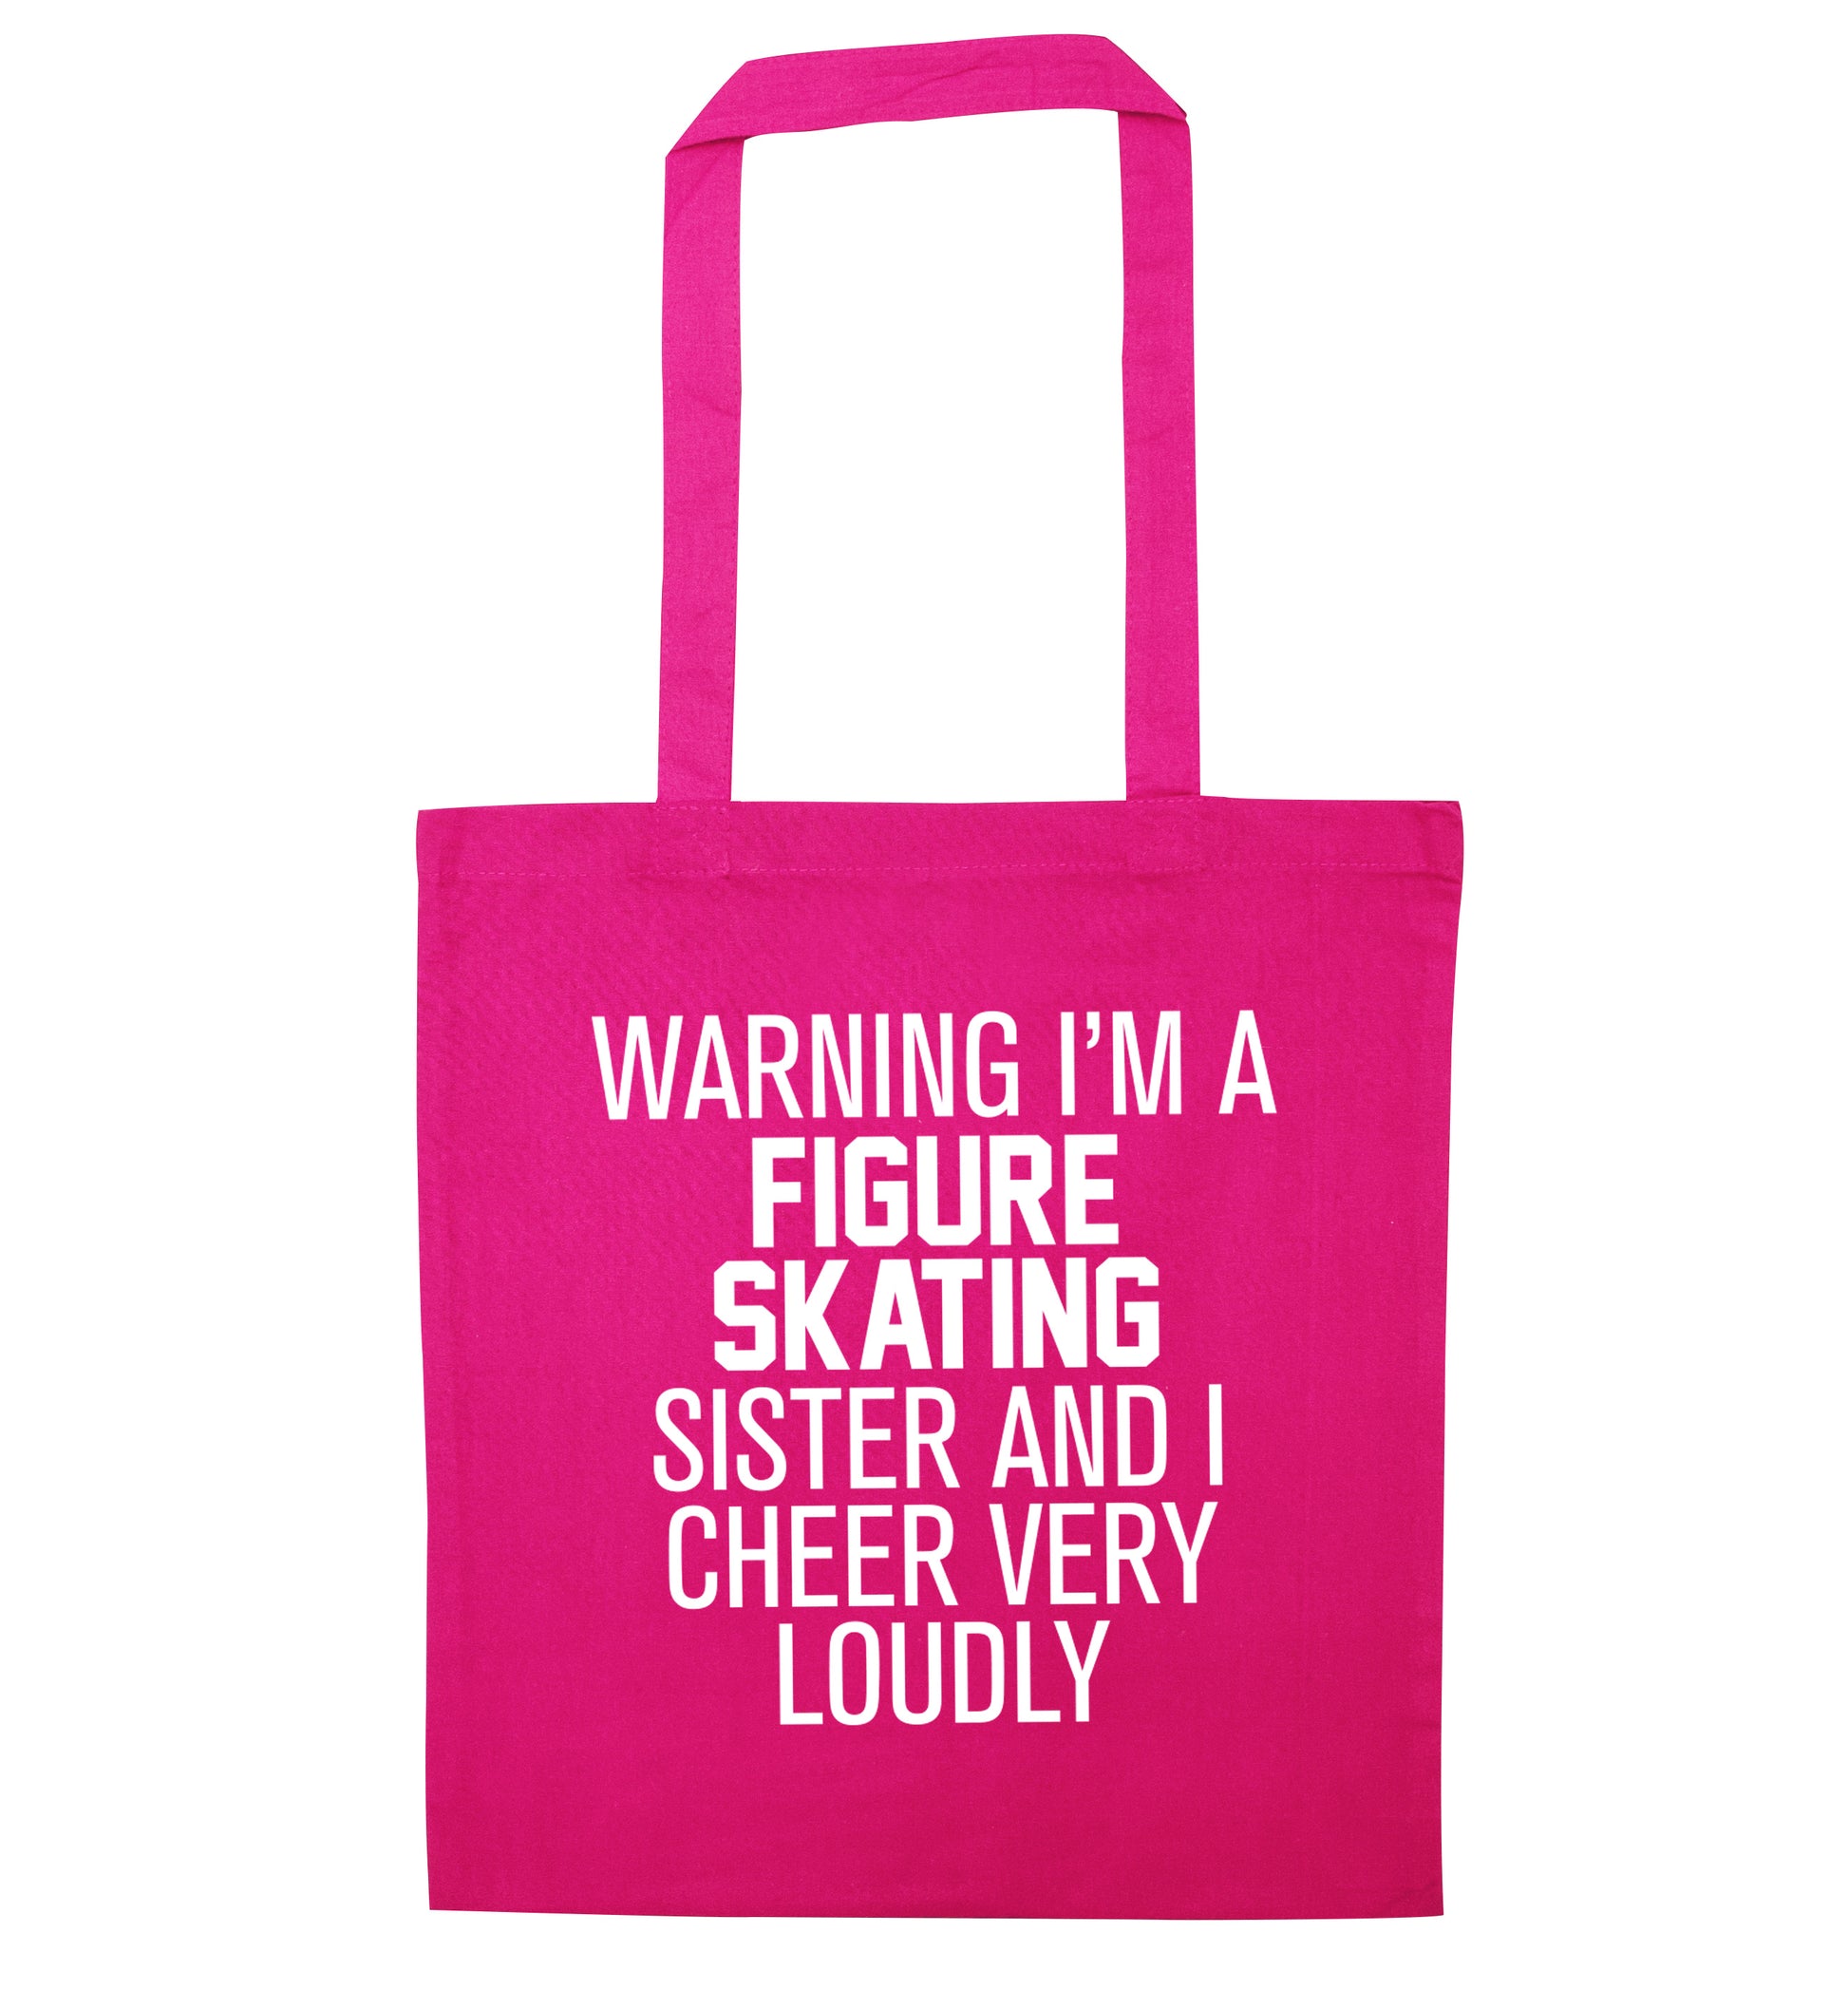 Warning I'm a figure skating sister and I cheer very loudly pink tote bag